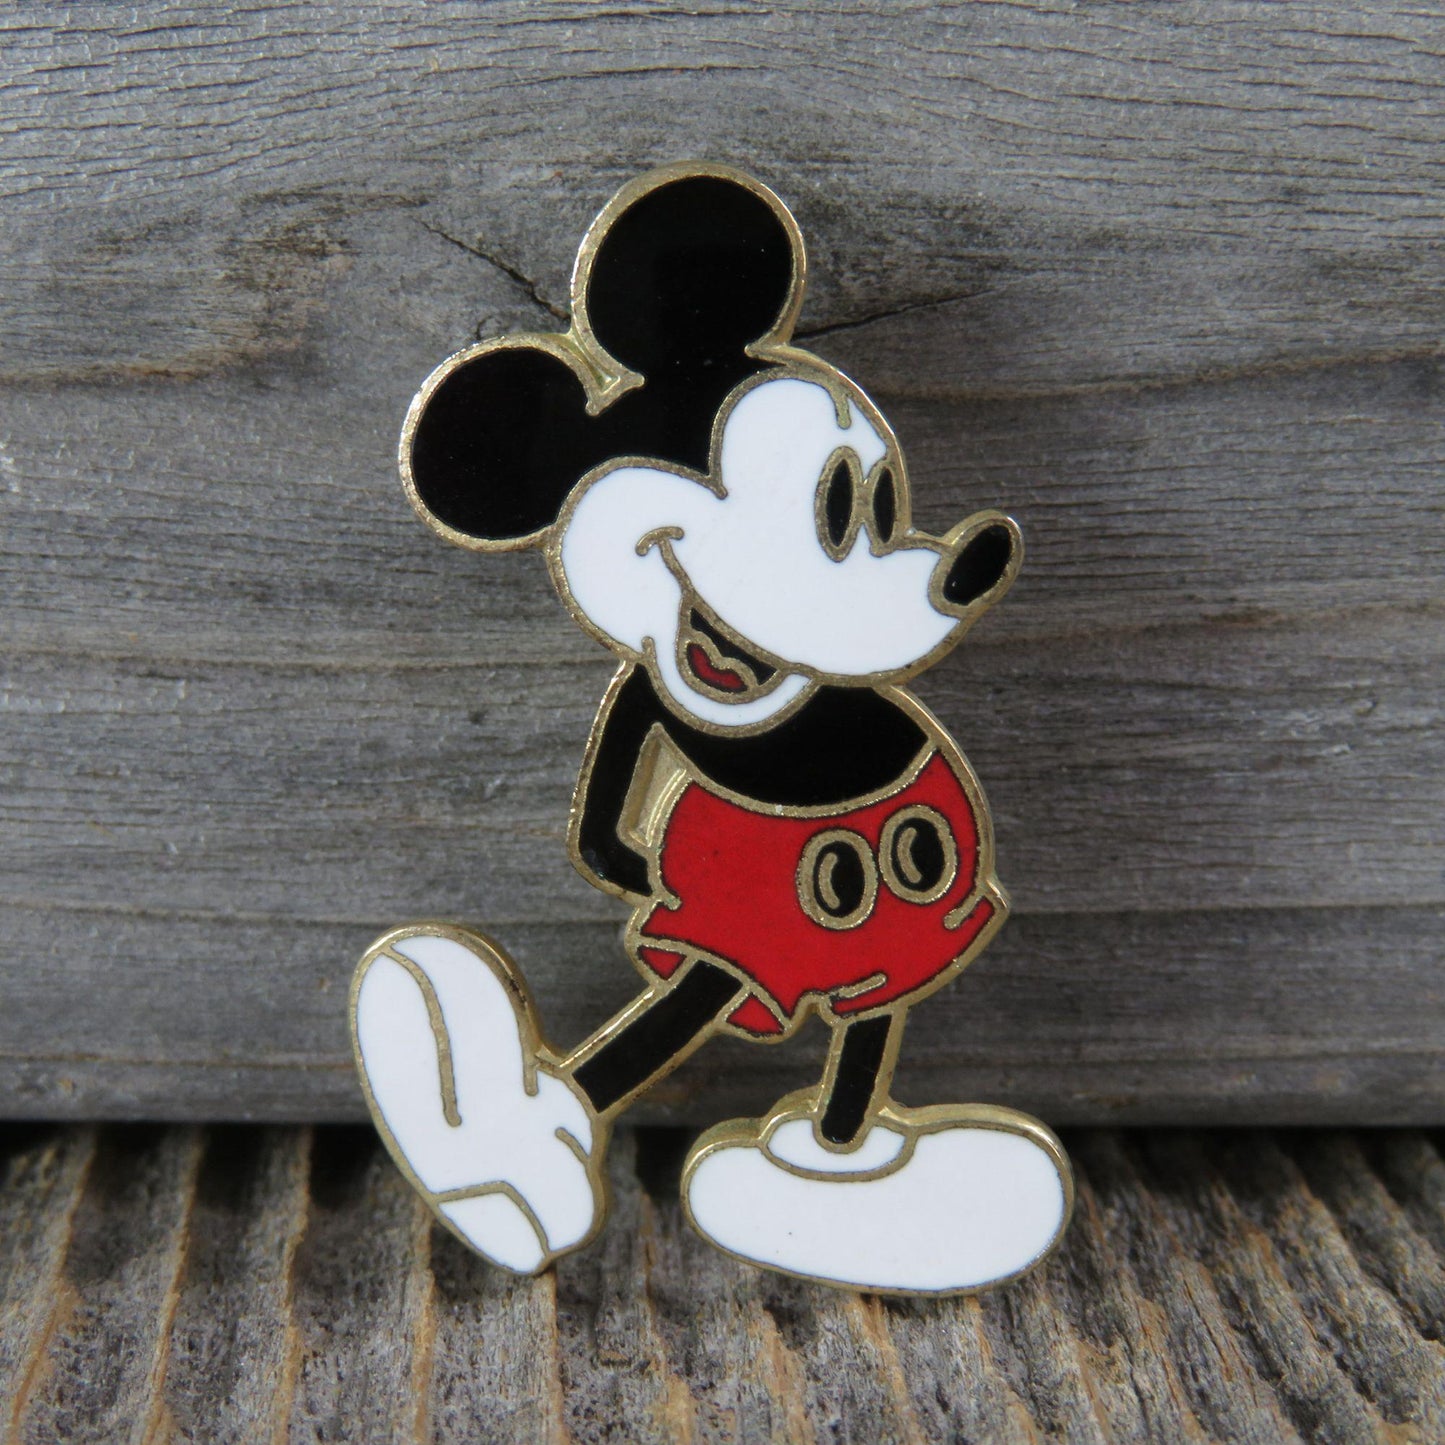 Vintage Mickey Mouse Pin Enamel Metal Brooch Walt Disney Productions Red Black White